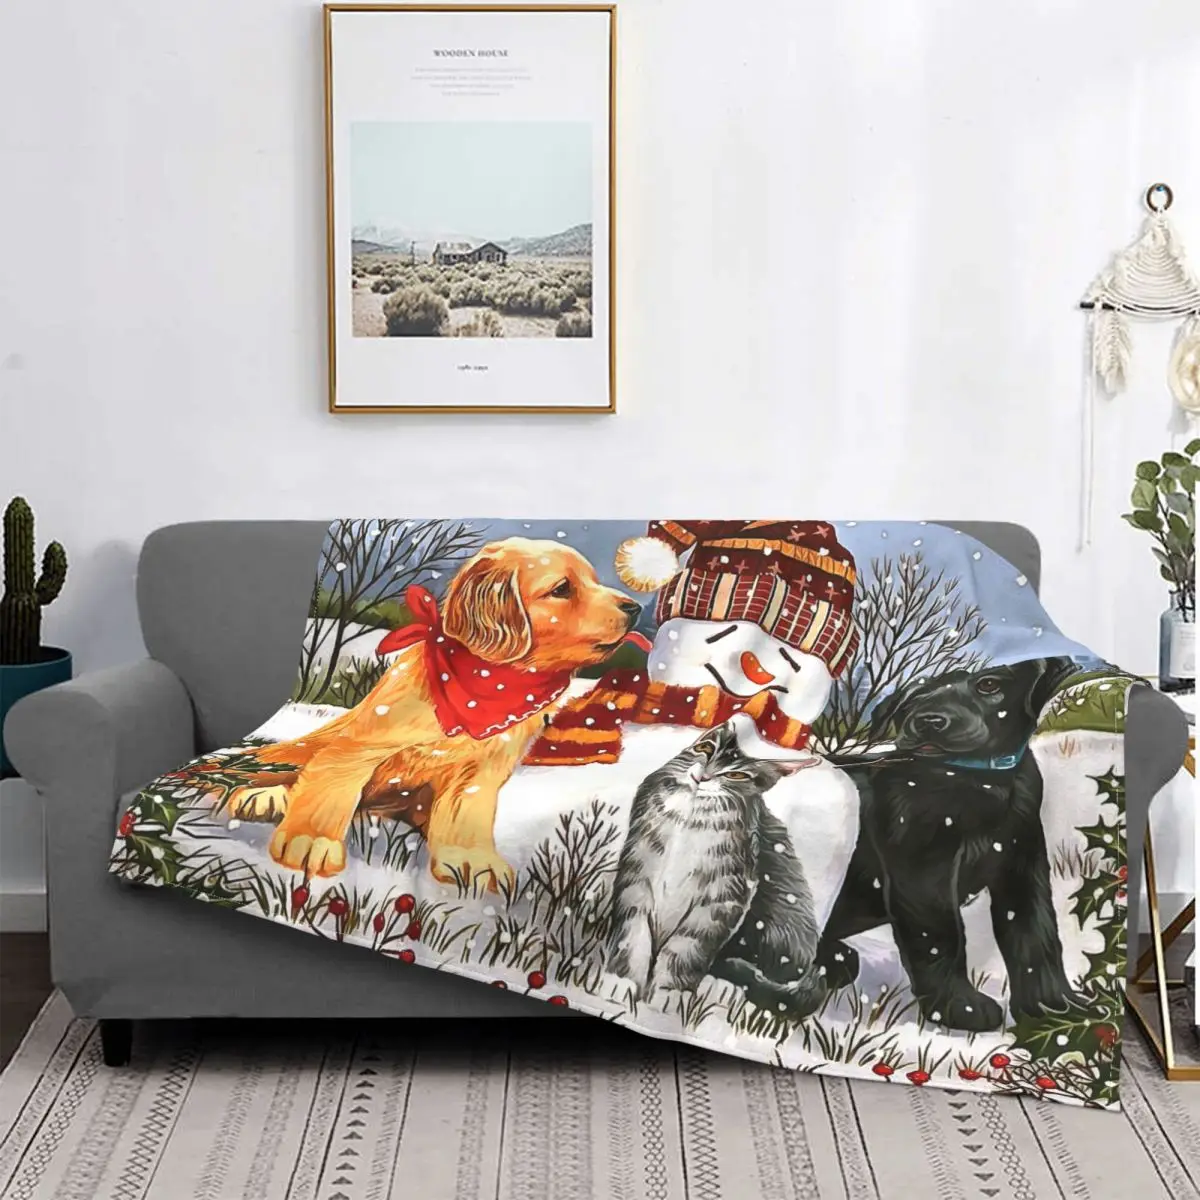 

Фланелевое теплое одеяло с 3D рисунком собаки, кошки, осени и весны, Рождества, нового года